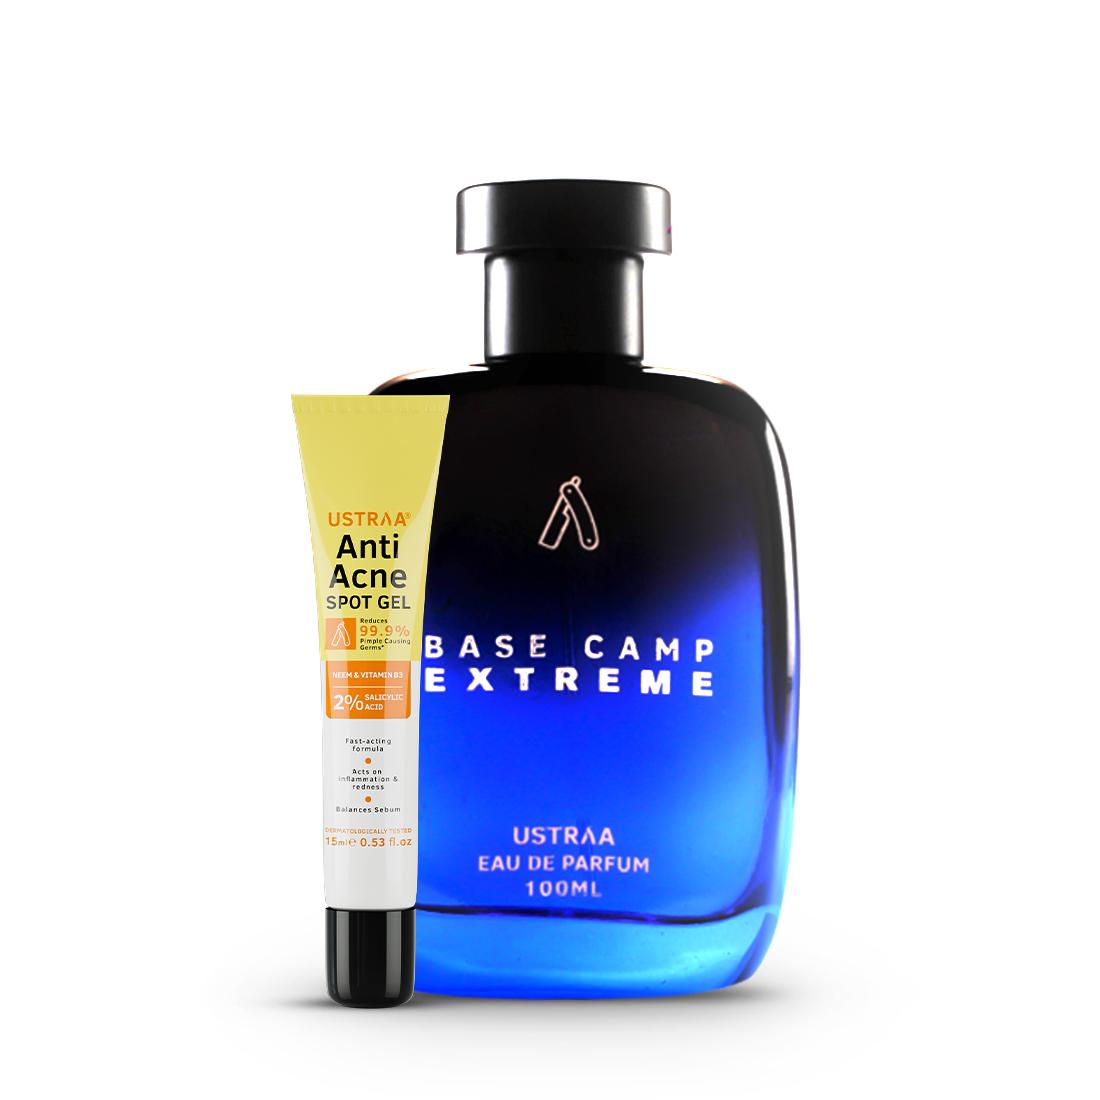 Base Camp Extreme EDP - Perfume for Men100ml & Anti Acne Spot Gel - 15ml